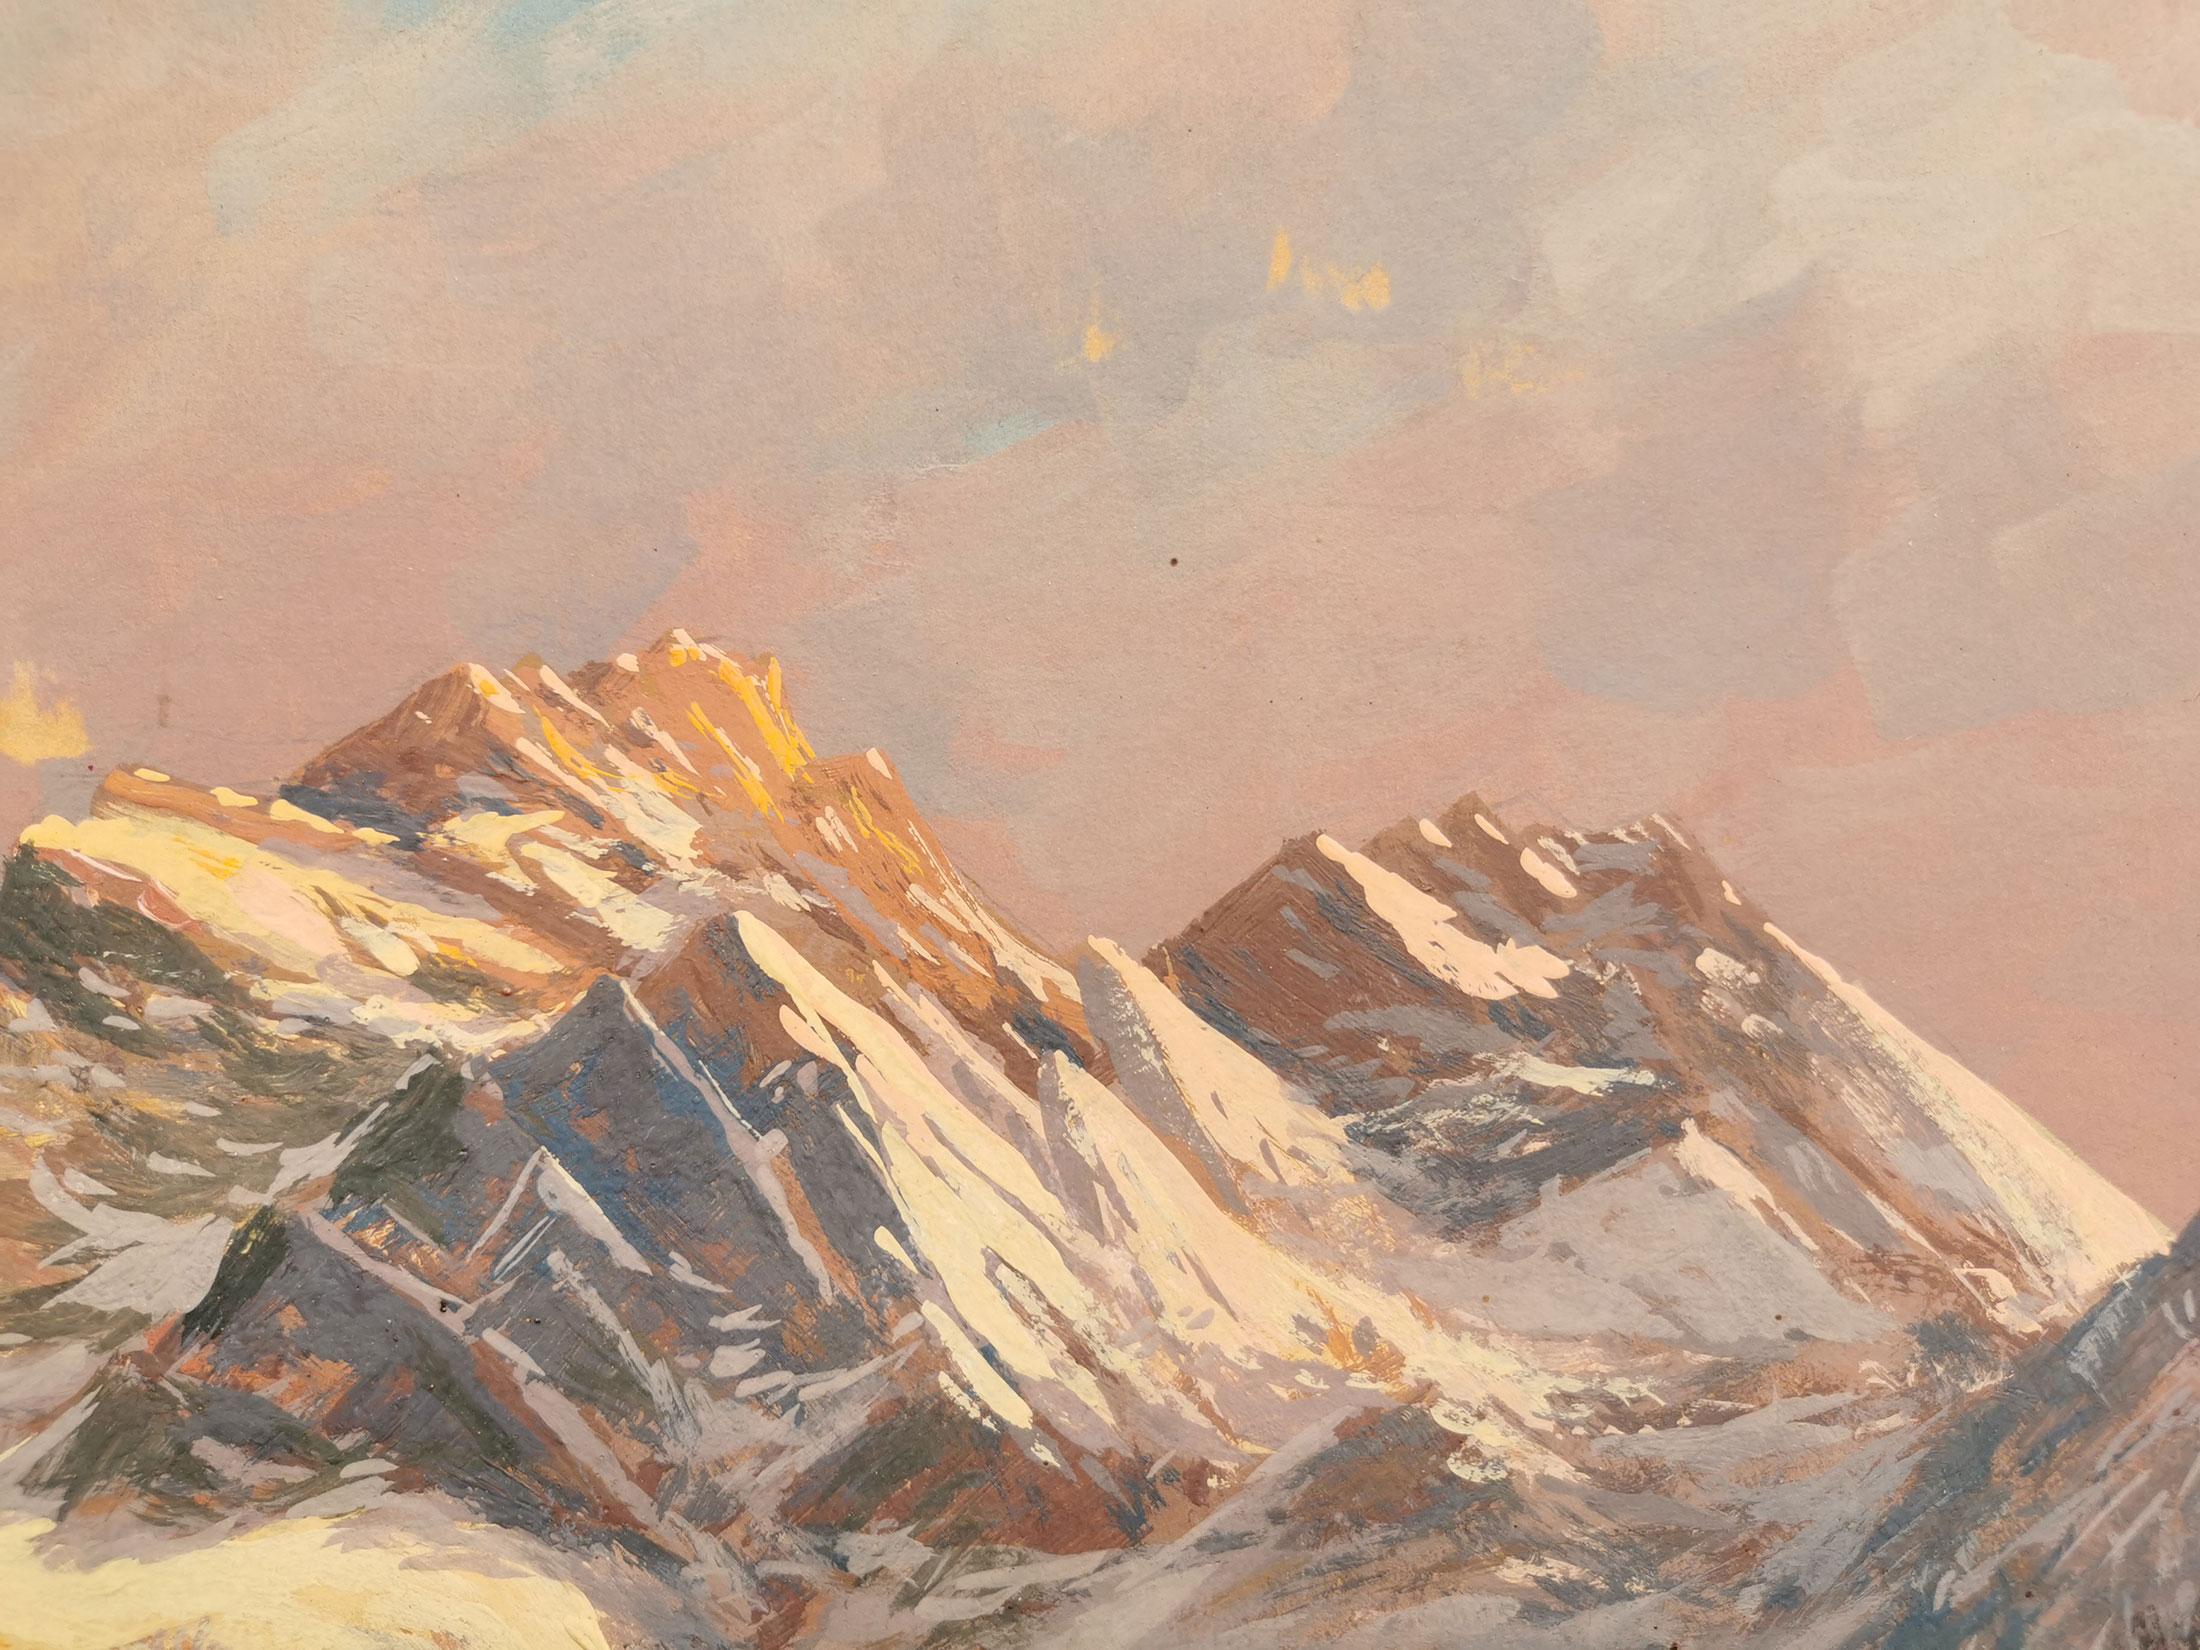 Oiled Sunset in Snowy Peaks Painting - Europe 1937